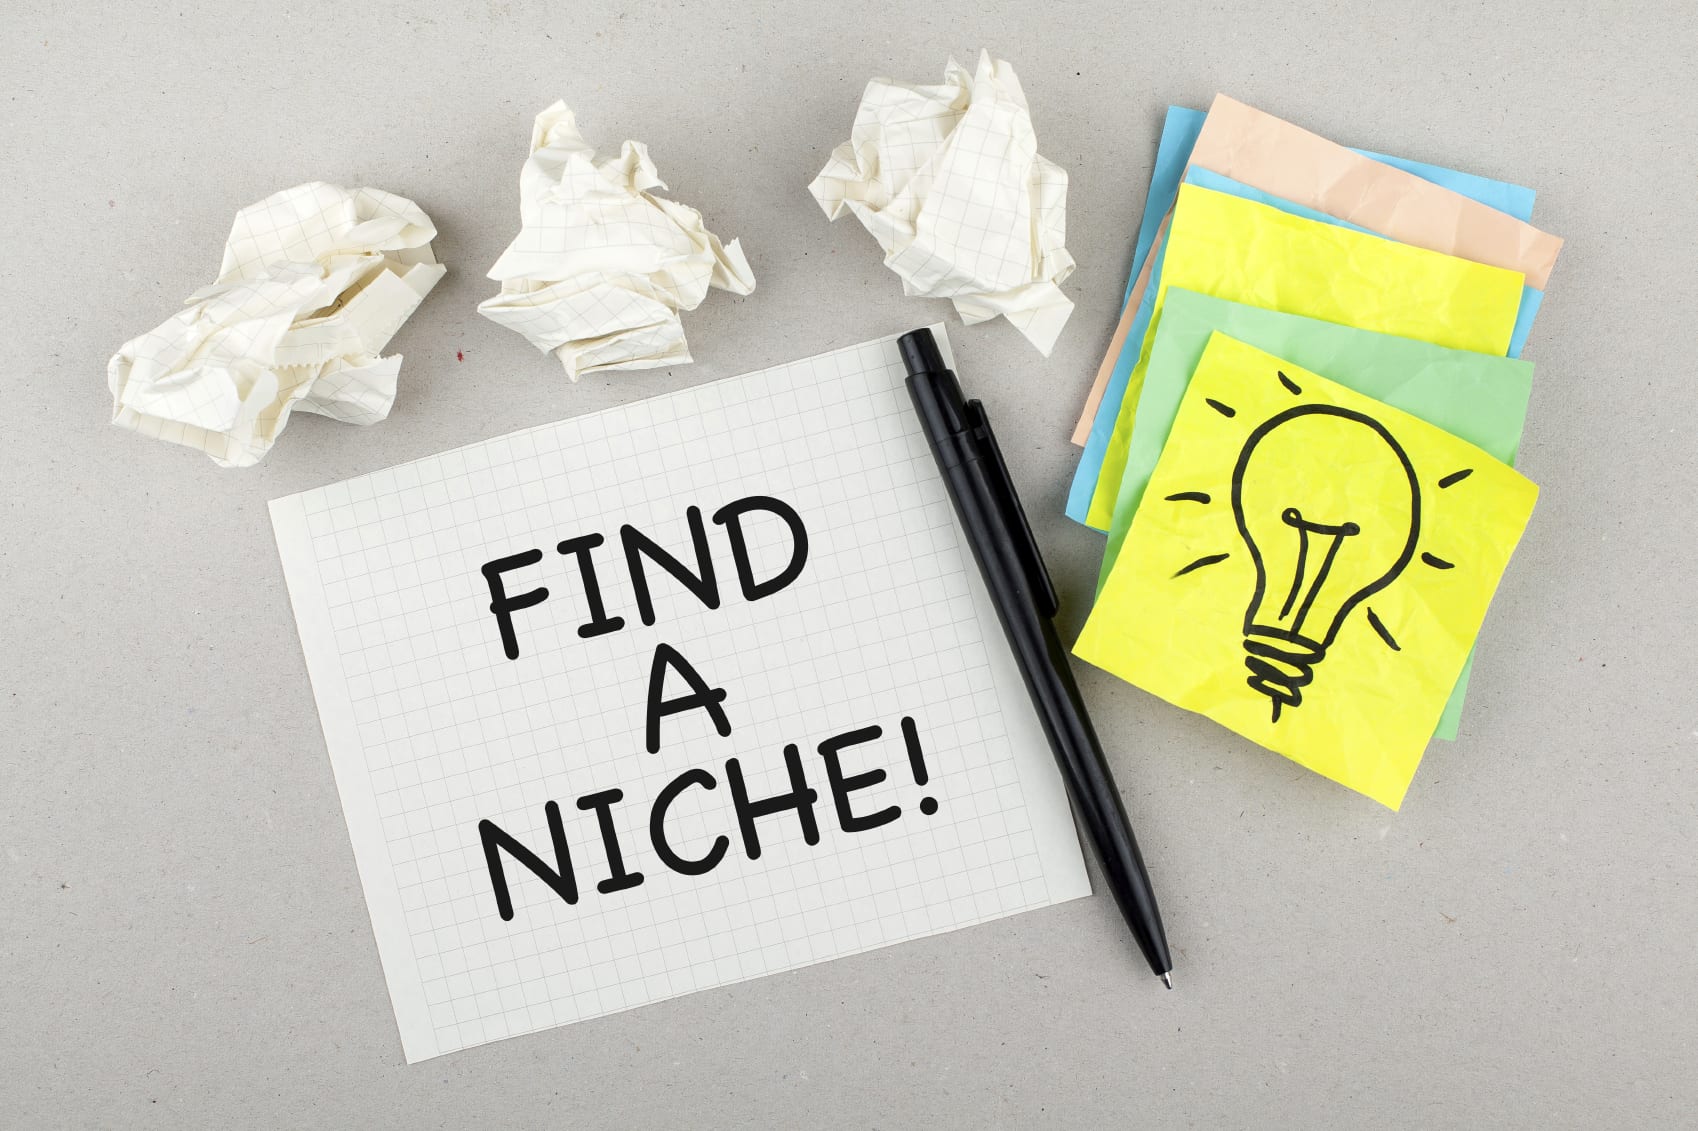 Our 5 Favorite “Niche” Small Businesses